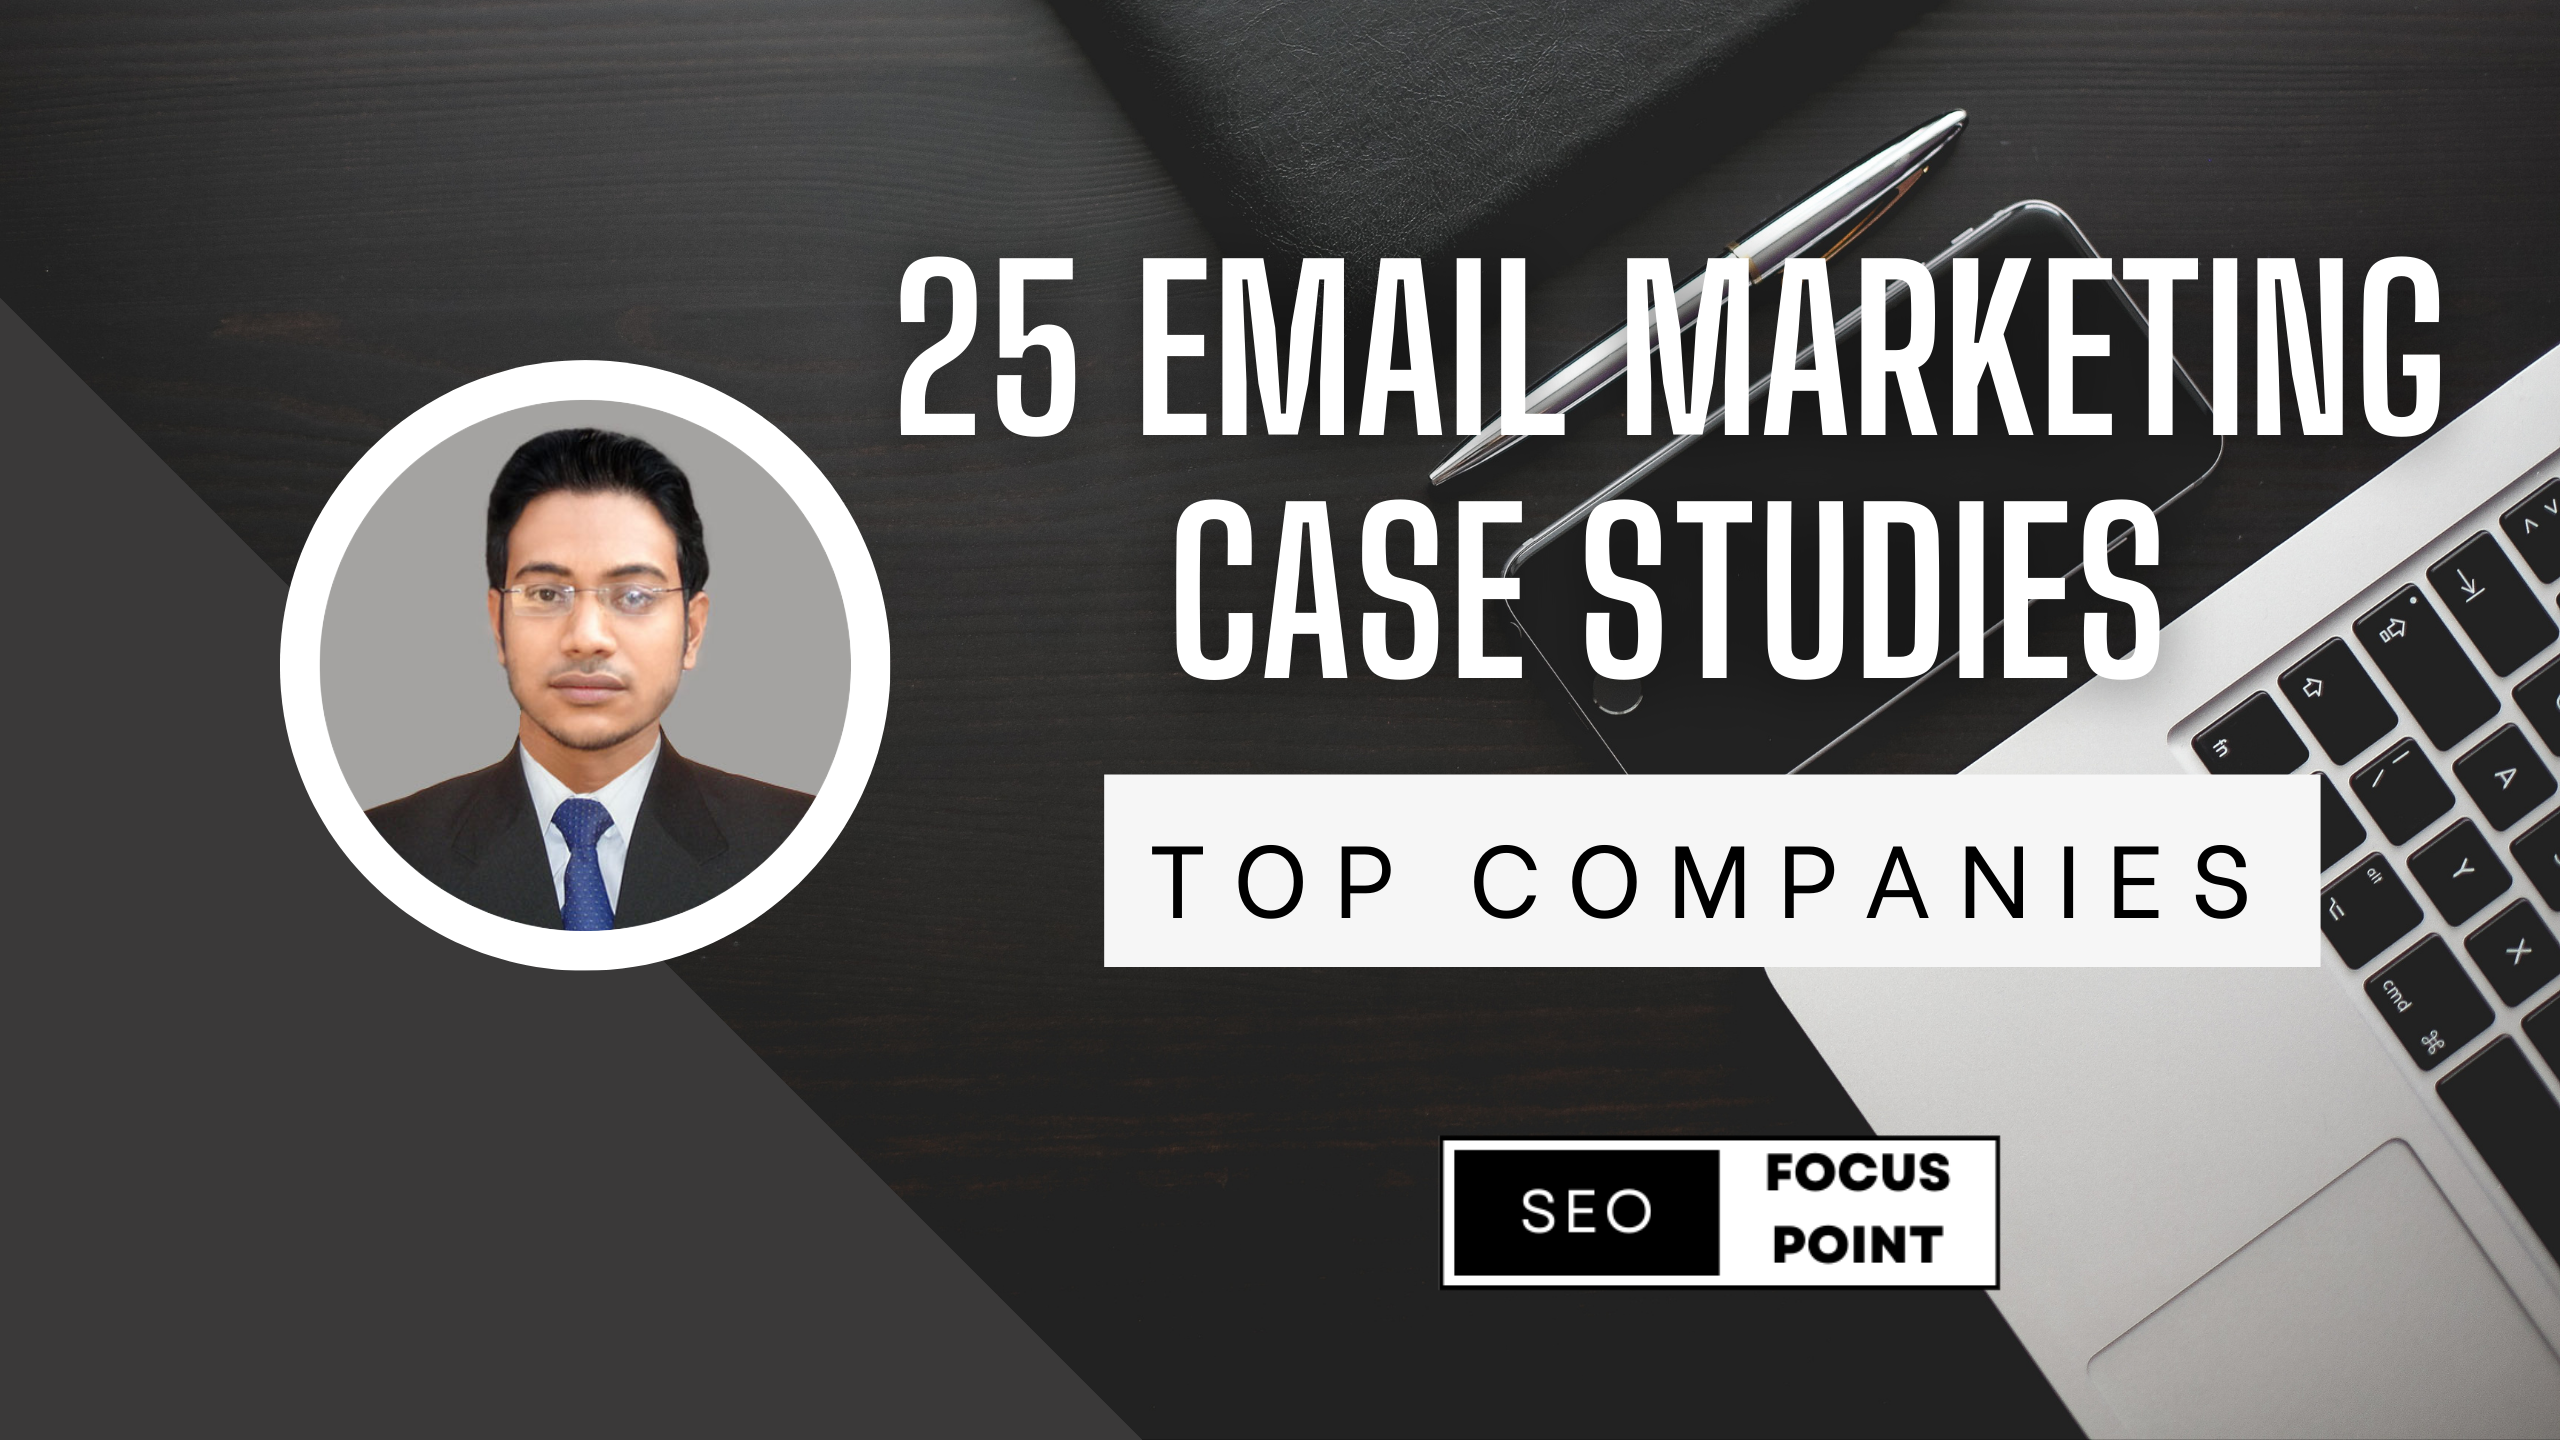 Email Marketing Case Studies